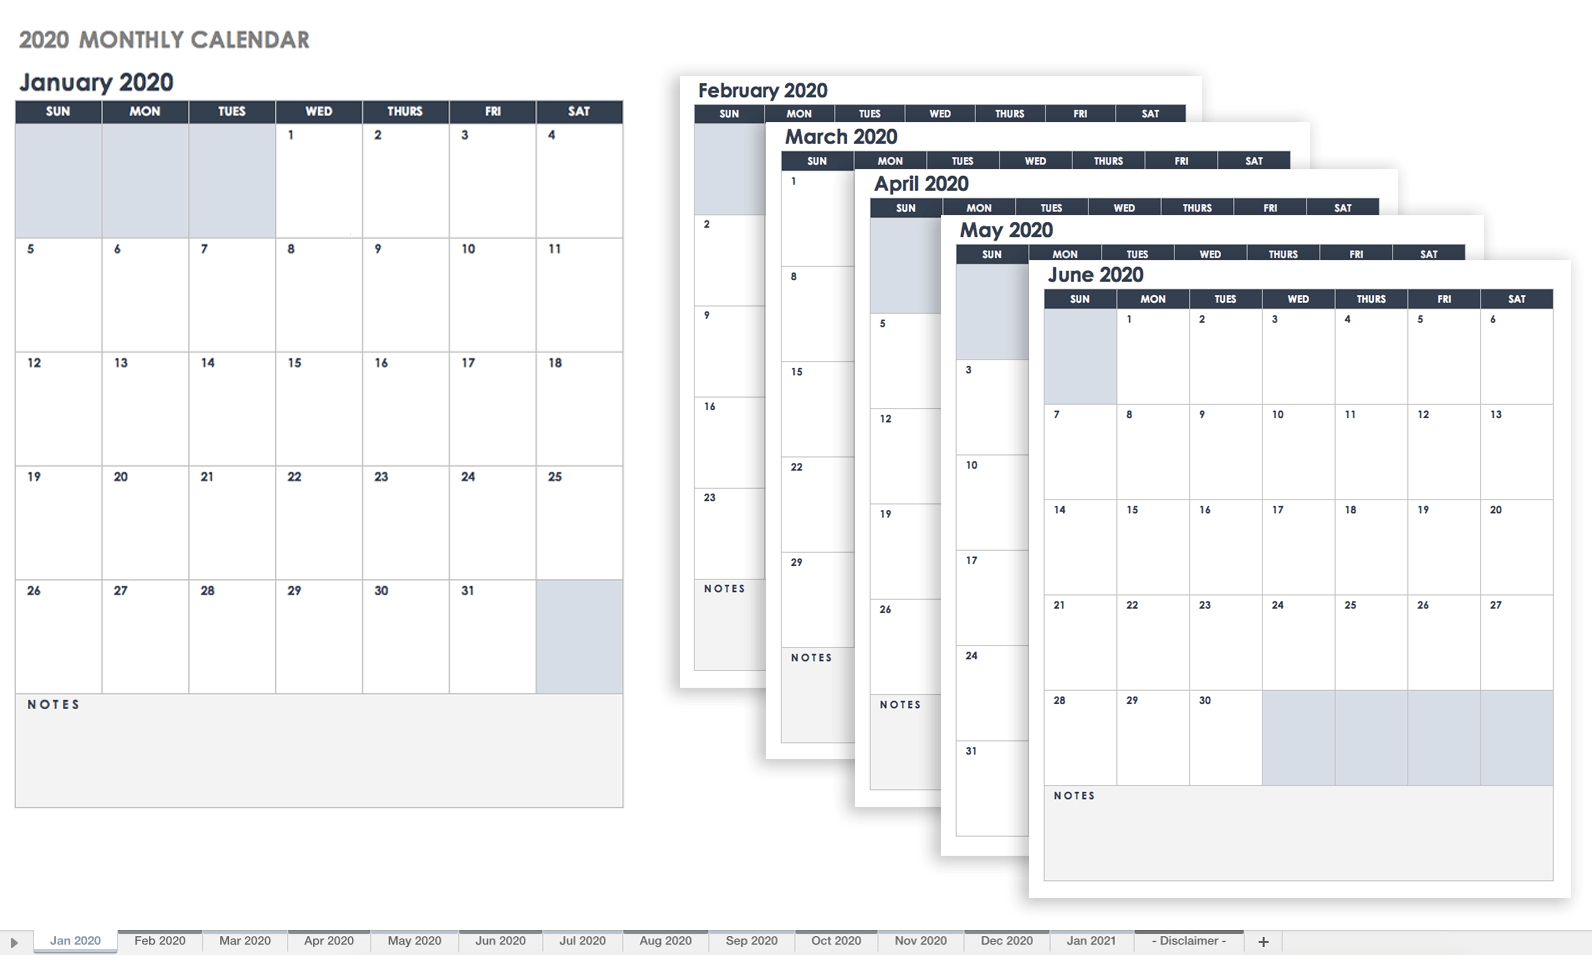 Free Google Calendar Templates | Smartsheet-Free Printable Monthly Calendar 2020 With Time Slots